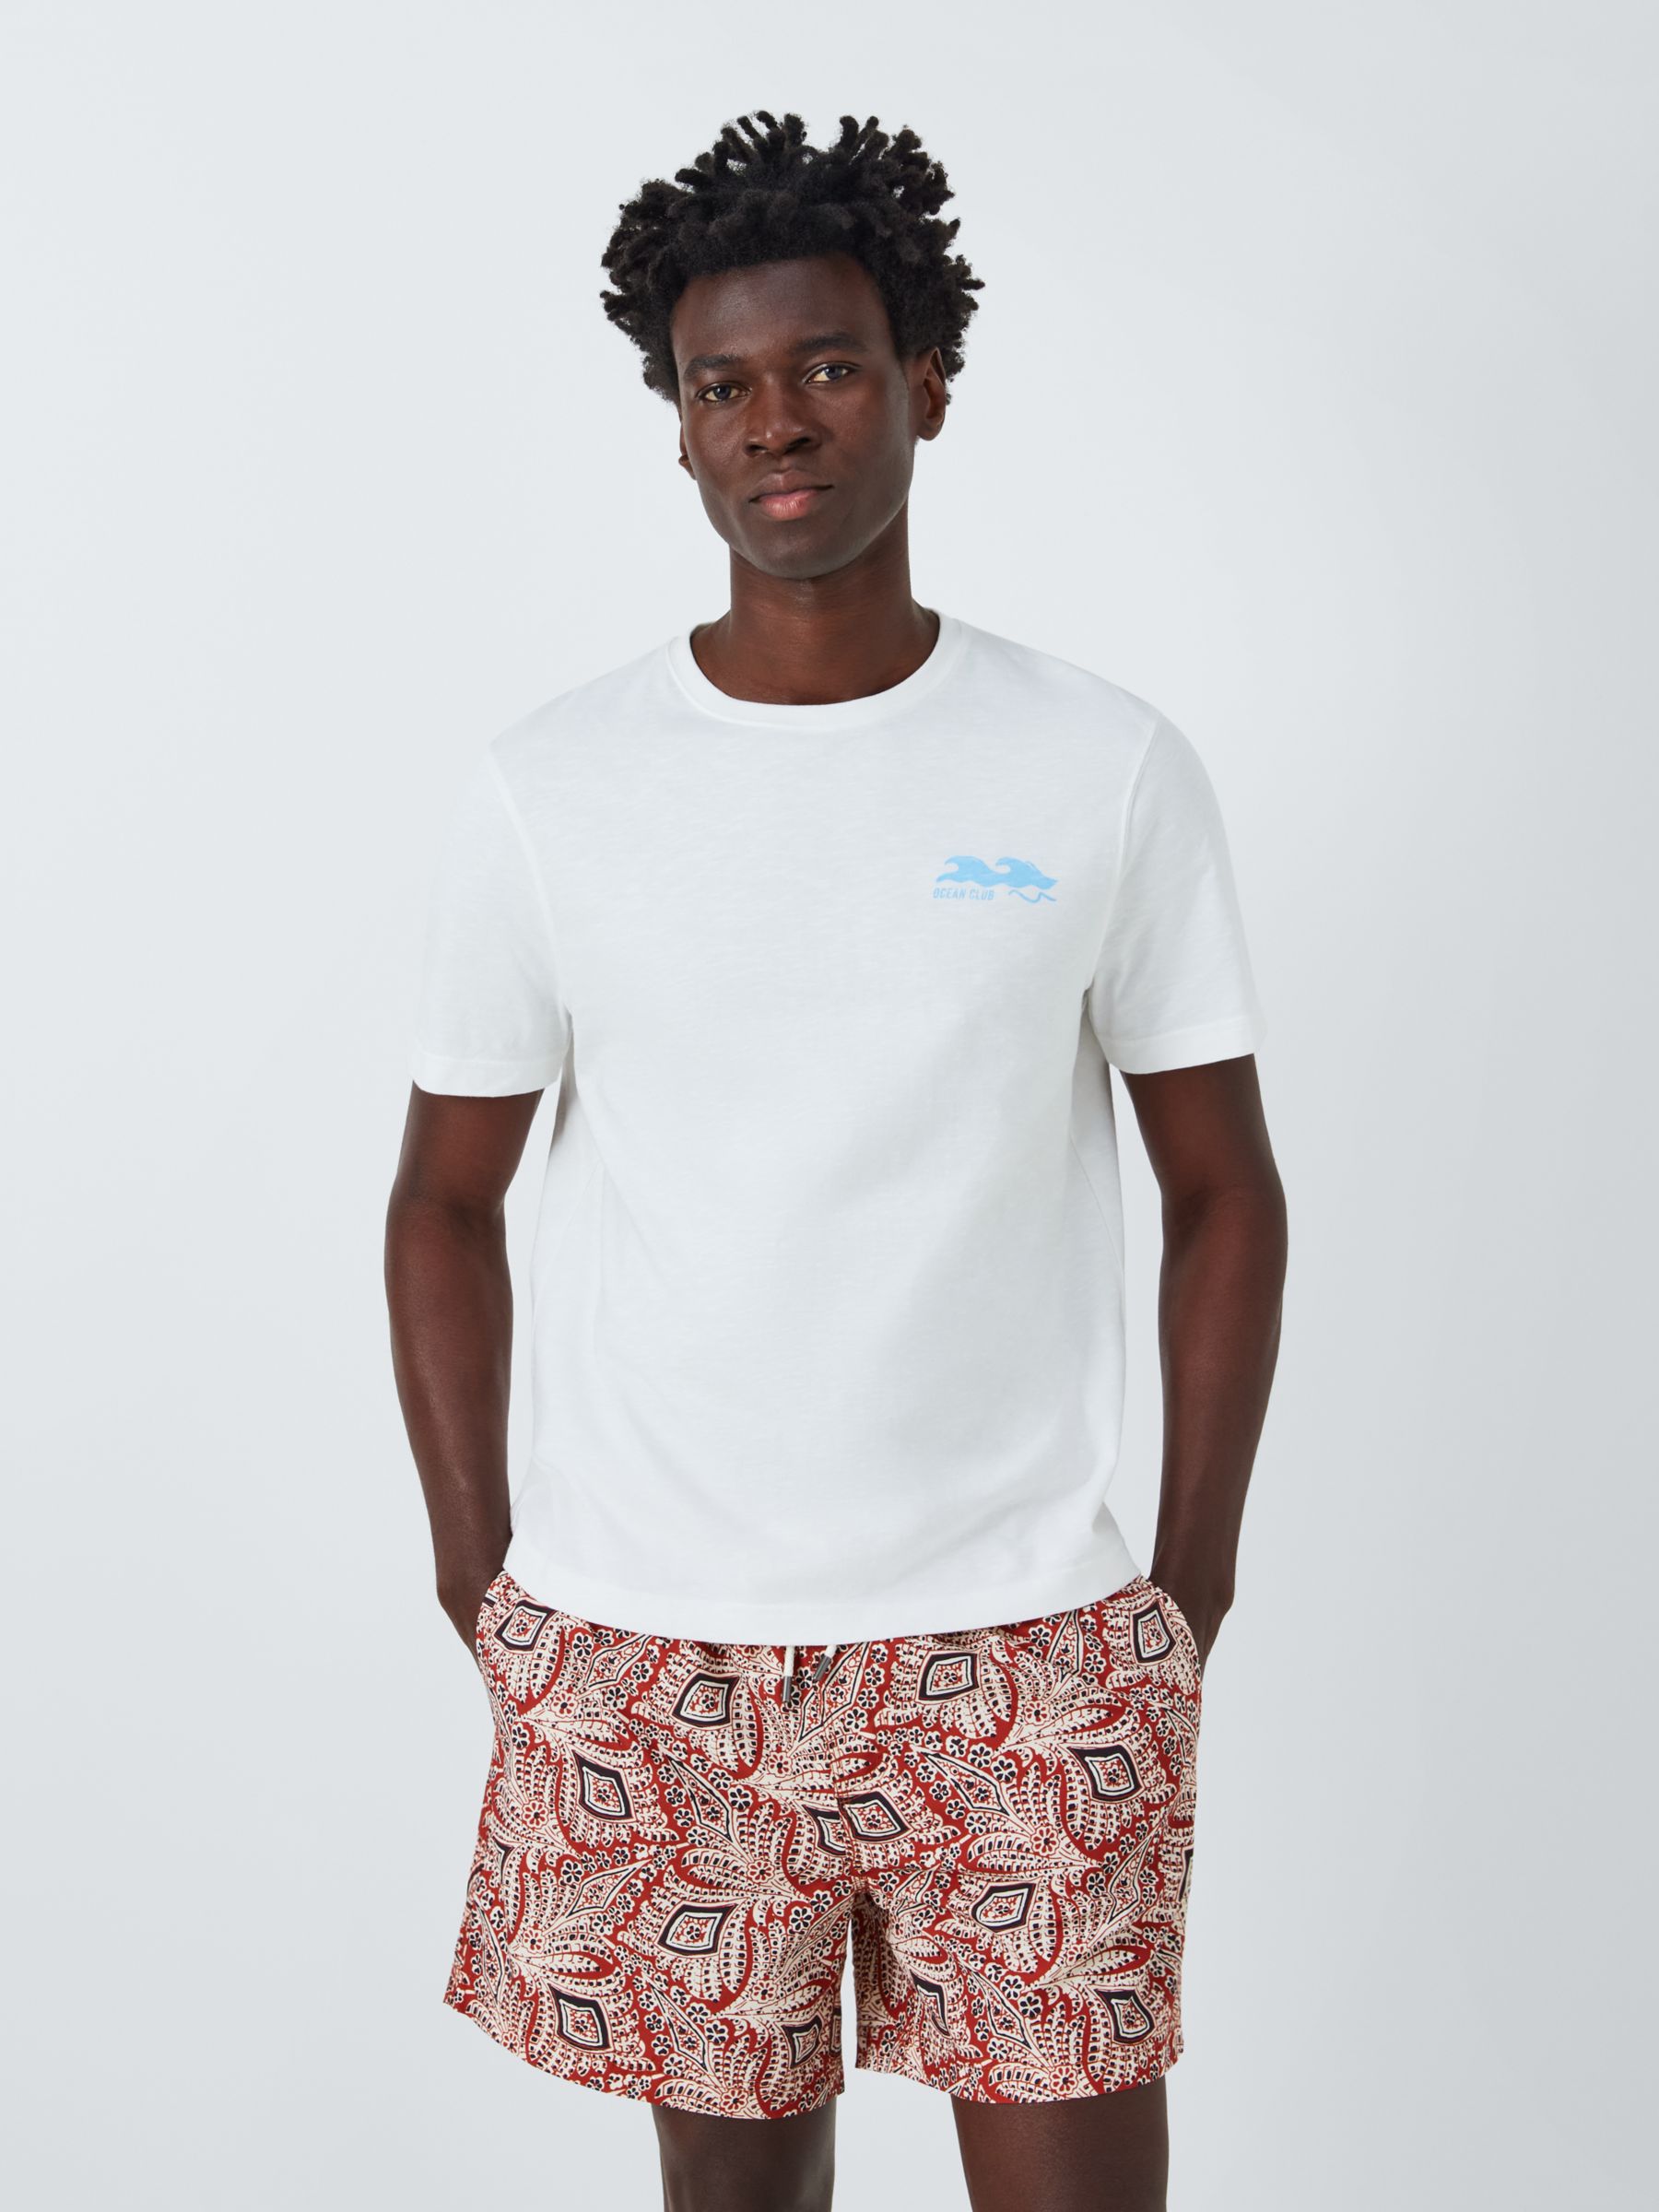 John Lewis Horizon Graphic T-Shirt, Cream, L